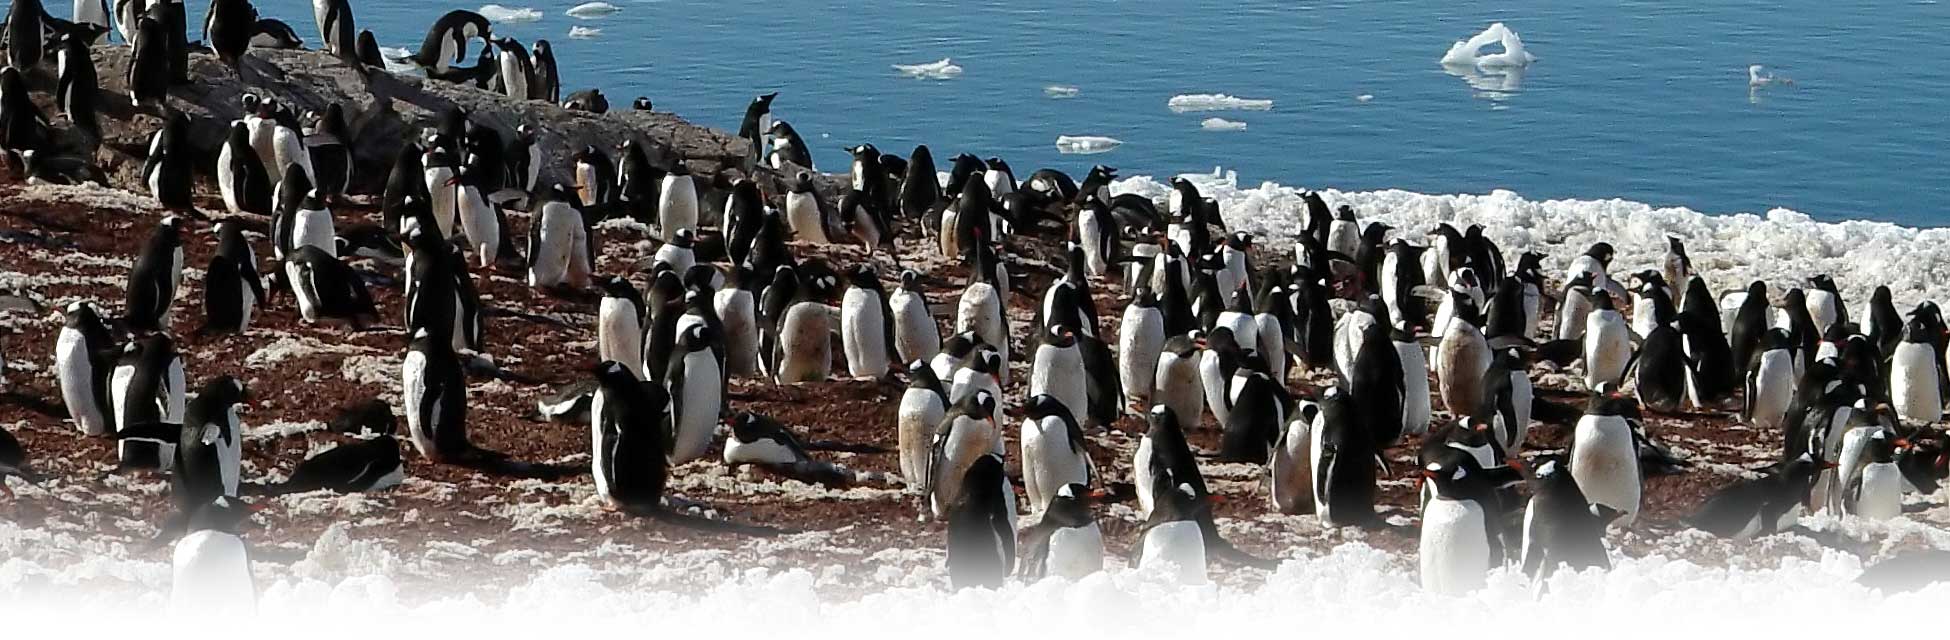 antarctica_pinguins3.jpg